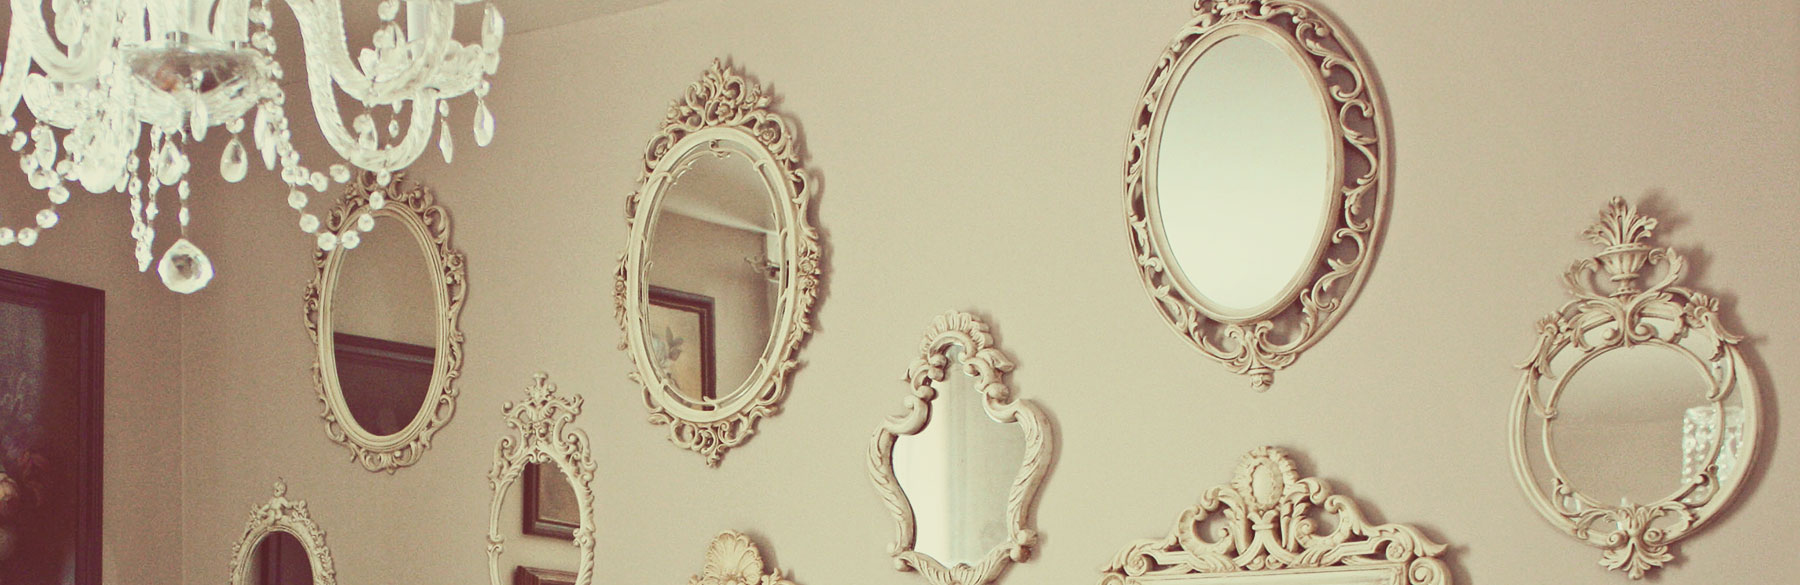 vintage-mirrors-wall